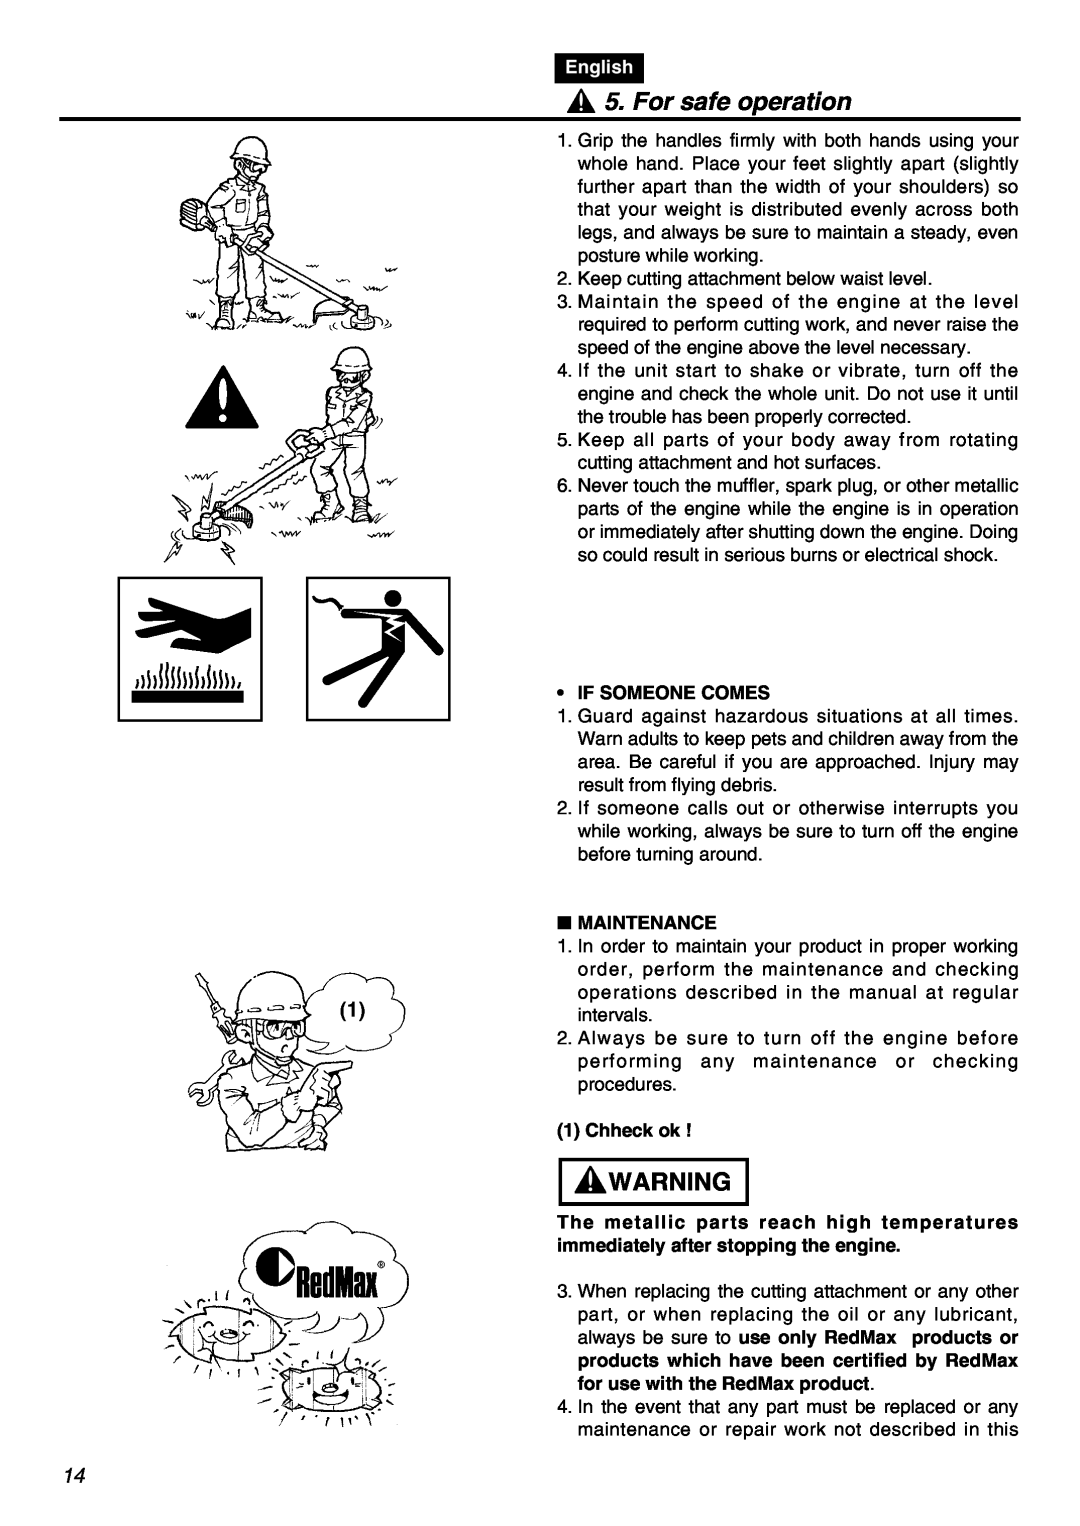 Zenoah TR2301S manual For safe operation, English, If Someone Comes, Maintenance, Chheck ok 